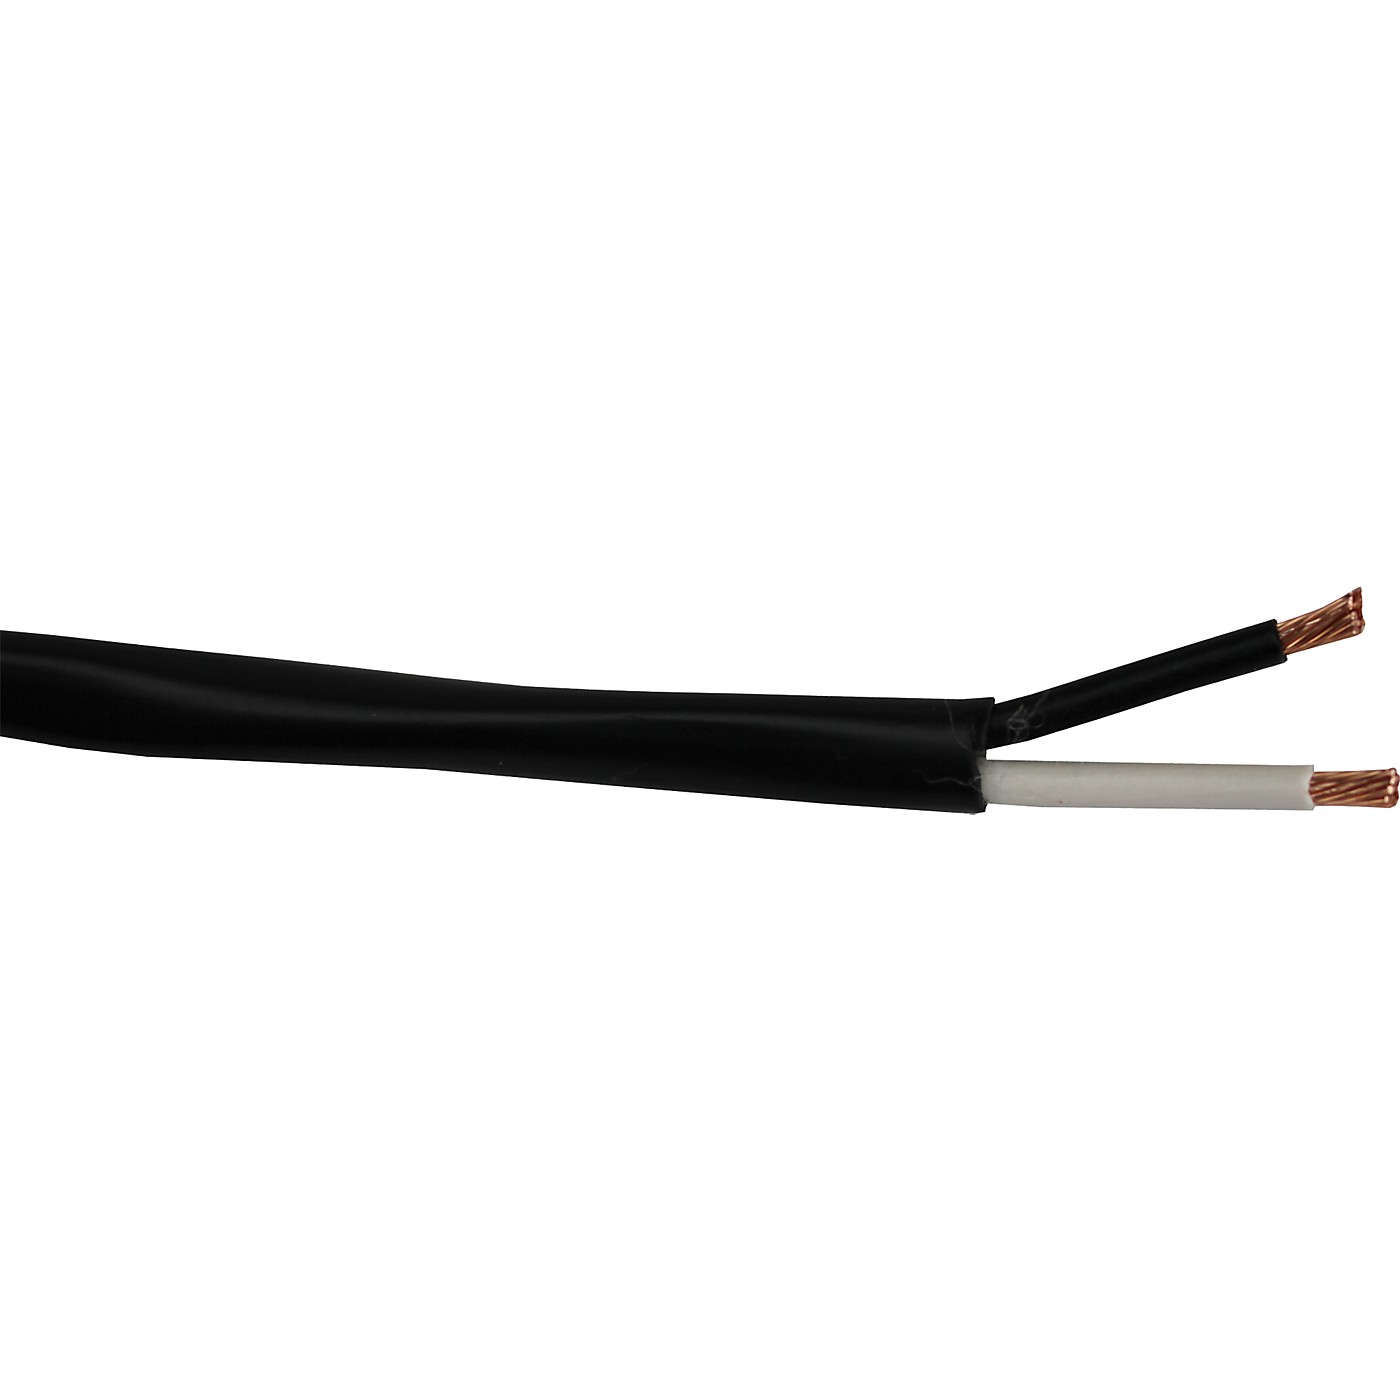 VTG 2 Conductor Bulk Speaker Cable per Foot thumbnail